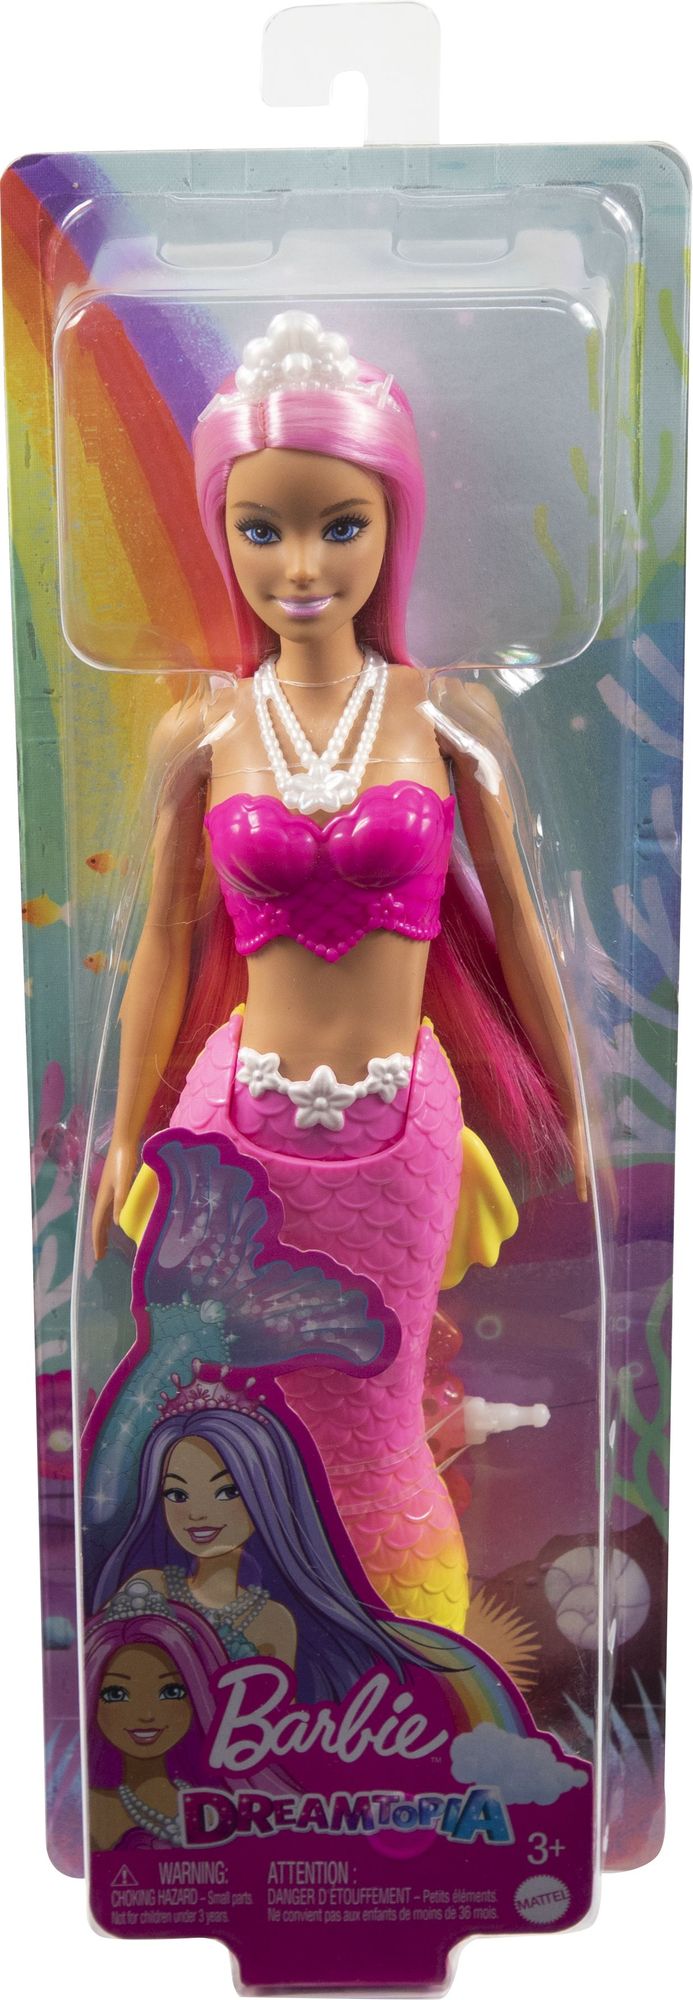 Barbie - Barbie Dreamtopia Meerjungfrau-Puppe\' kaufen - Spielwaren